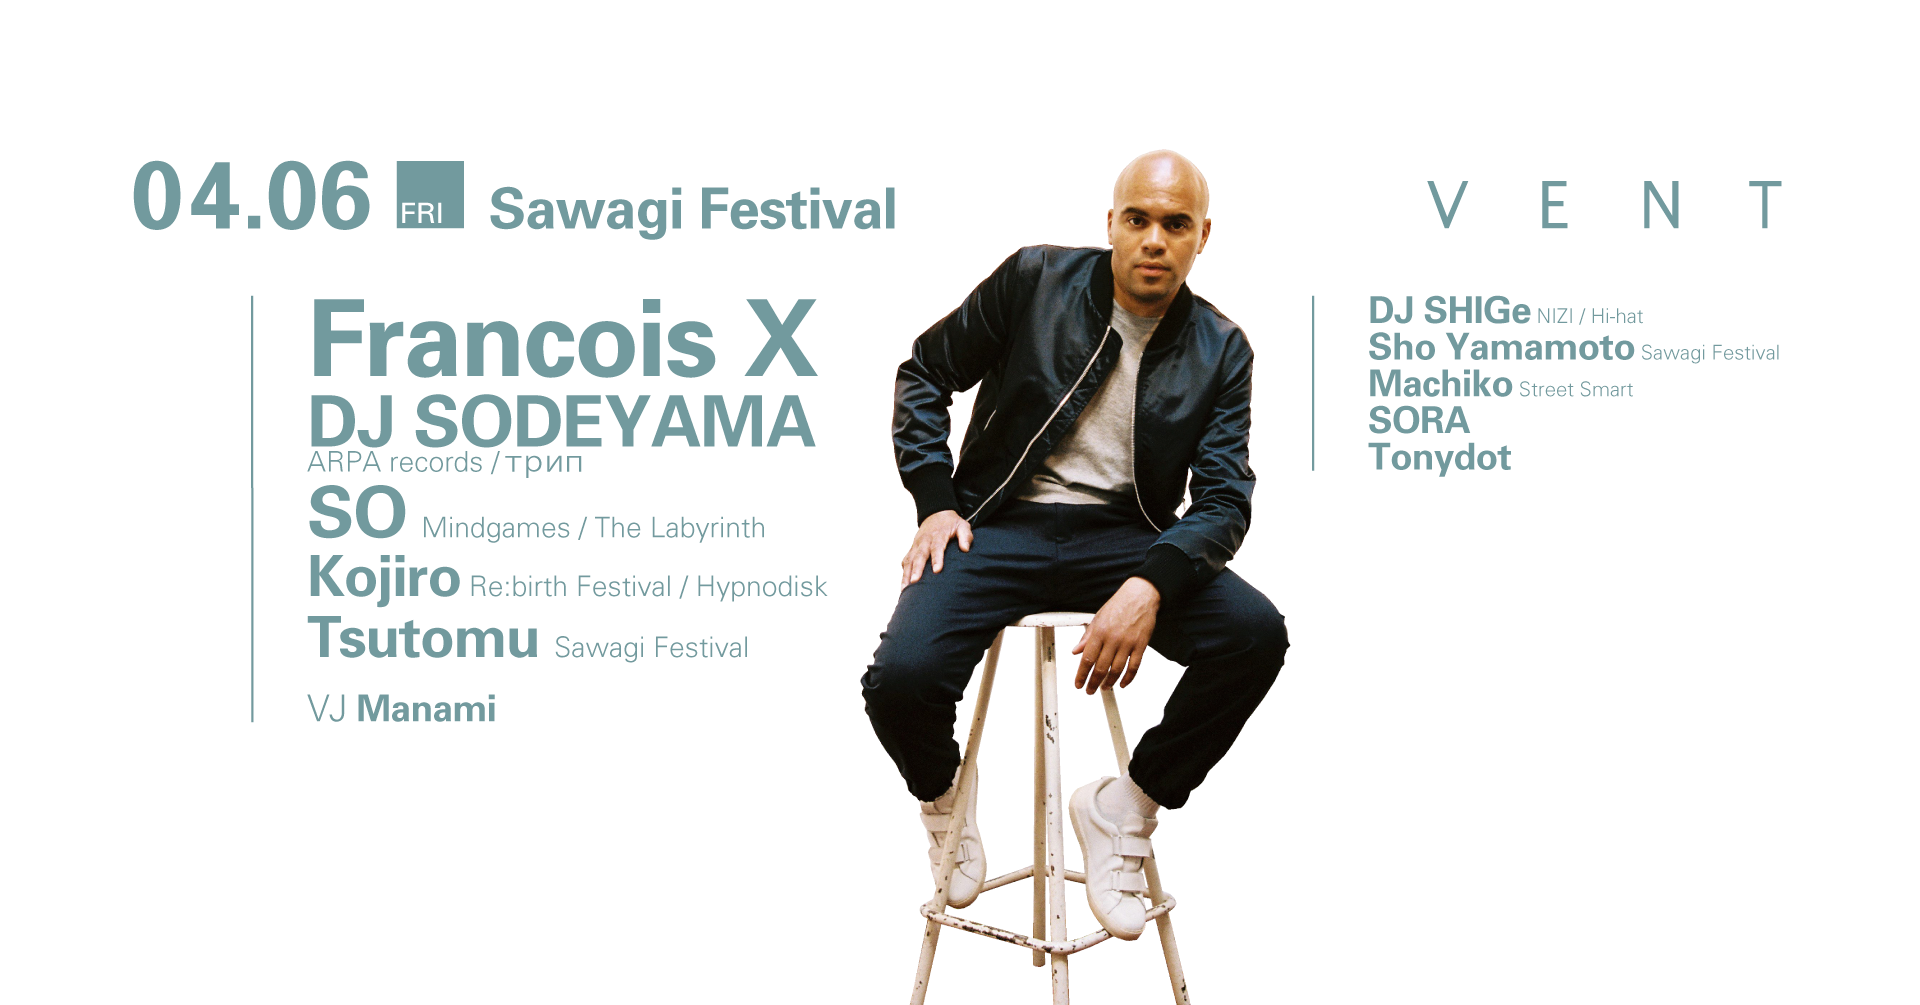 Francois X at Sawagi Festival